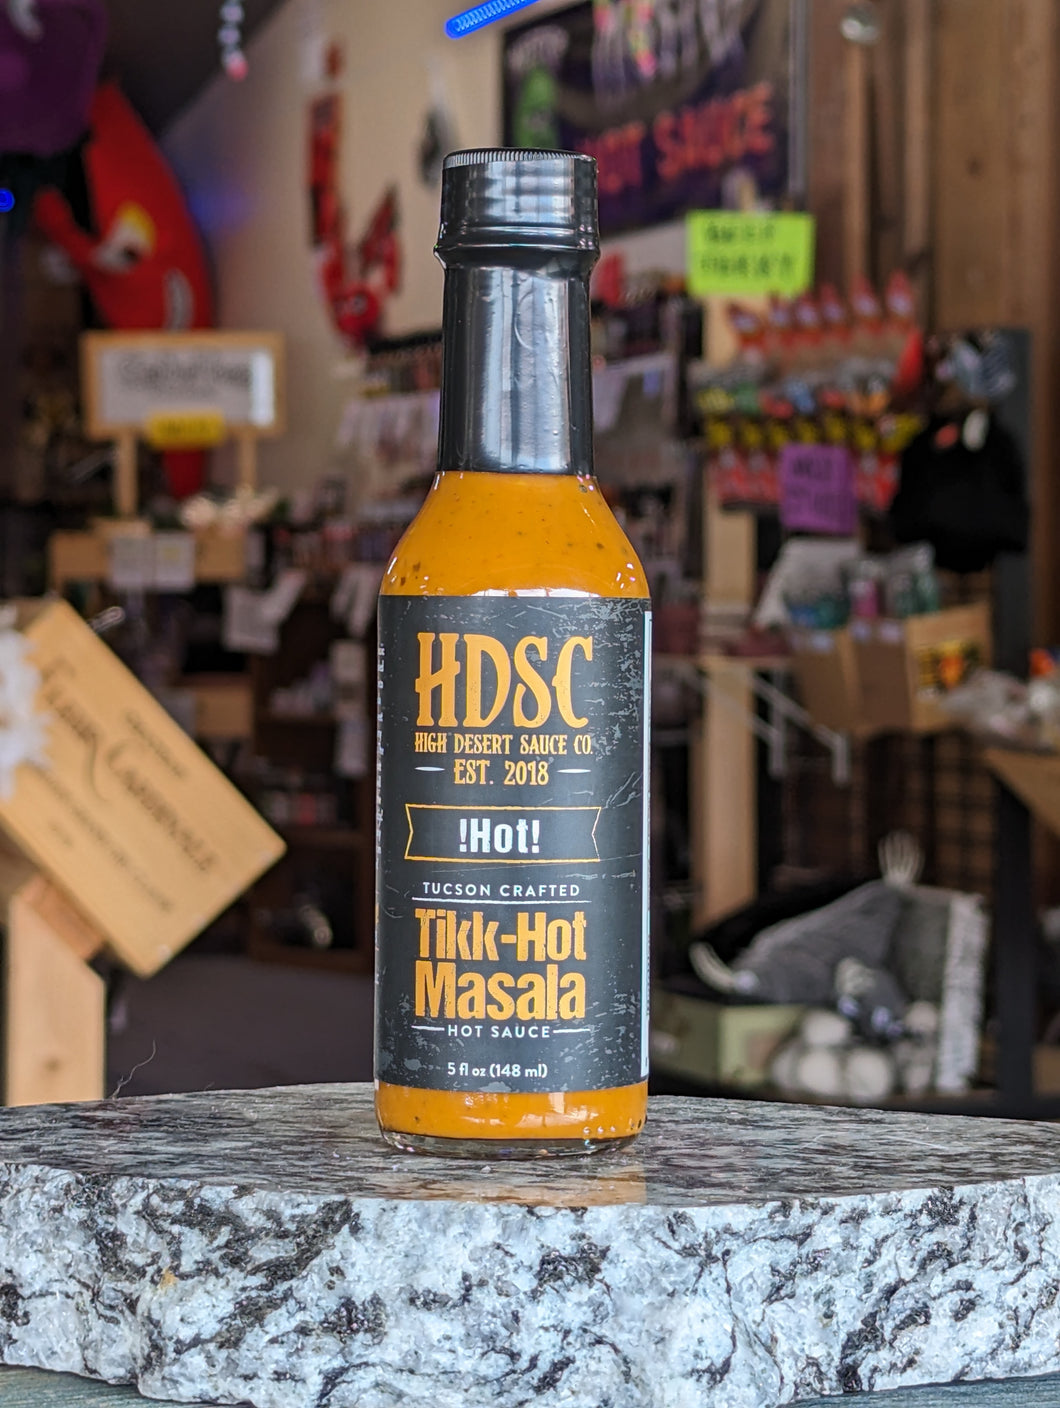 High Desert Sauce Co - Tikk-Hot Masala Hot Sauce